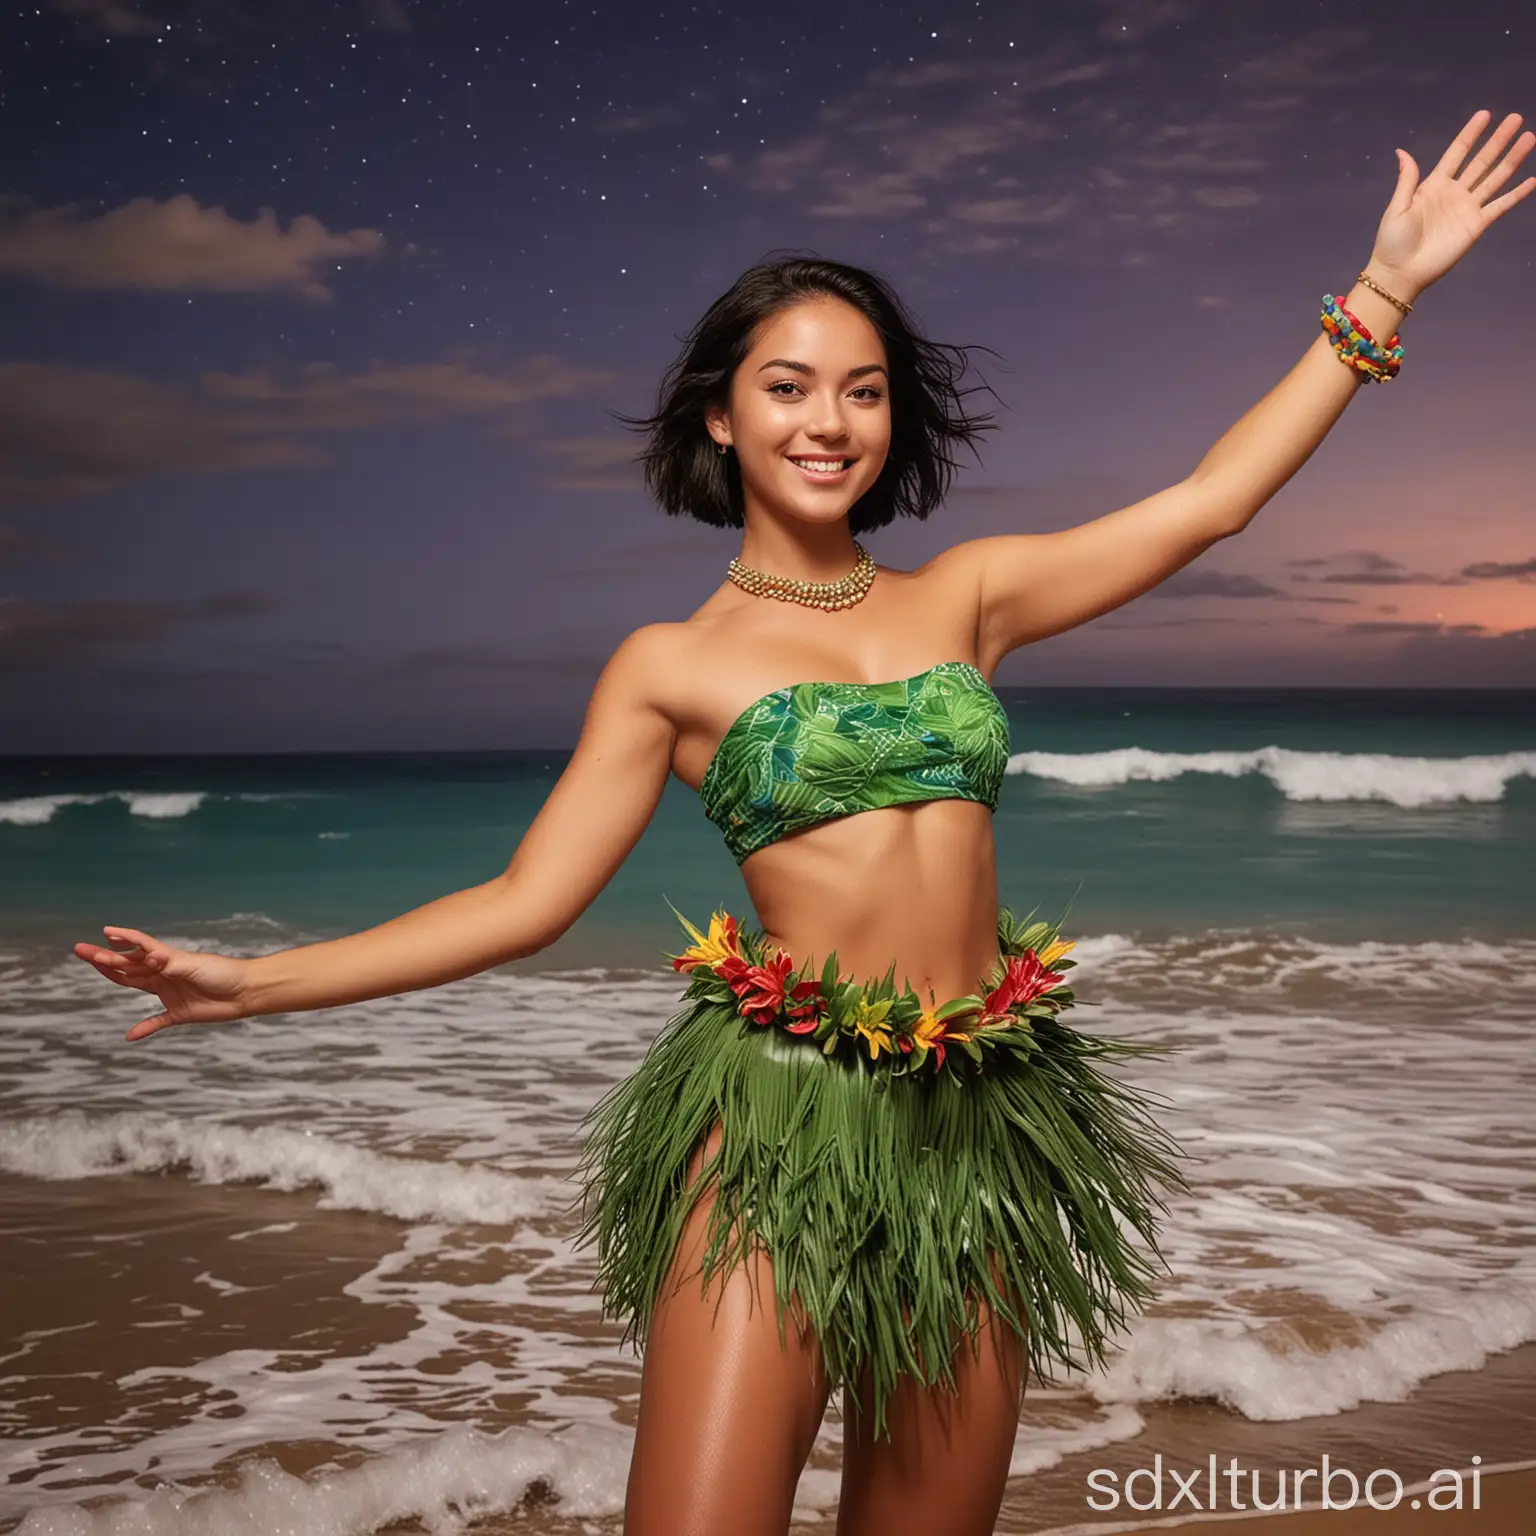 Vibrant-Hawaiian-Woman-Dancing-Joyfully-on-Beach-at-Night